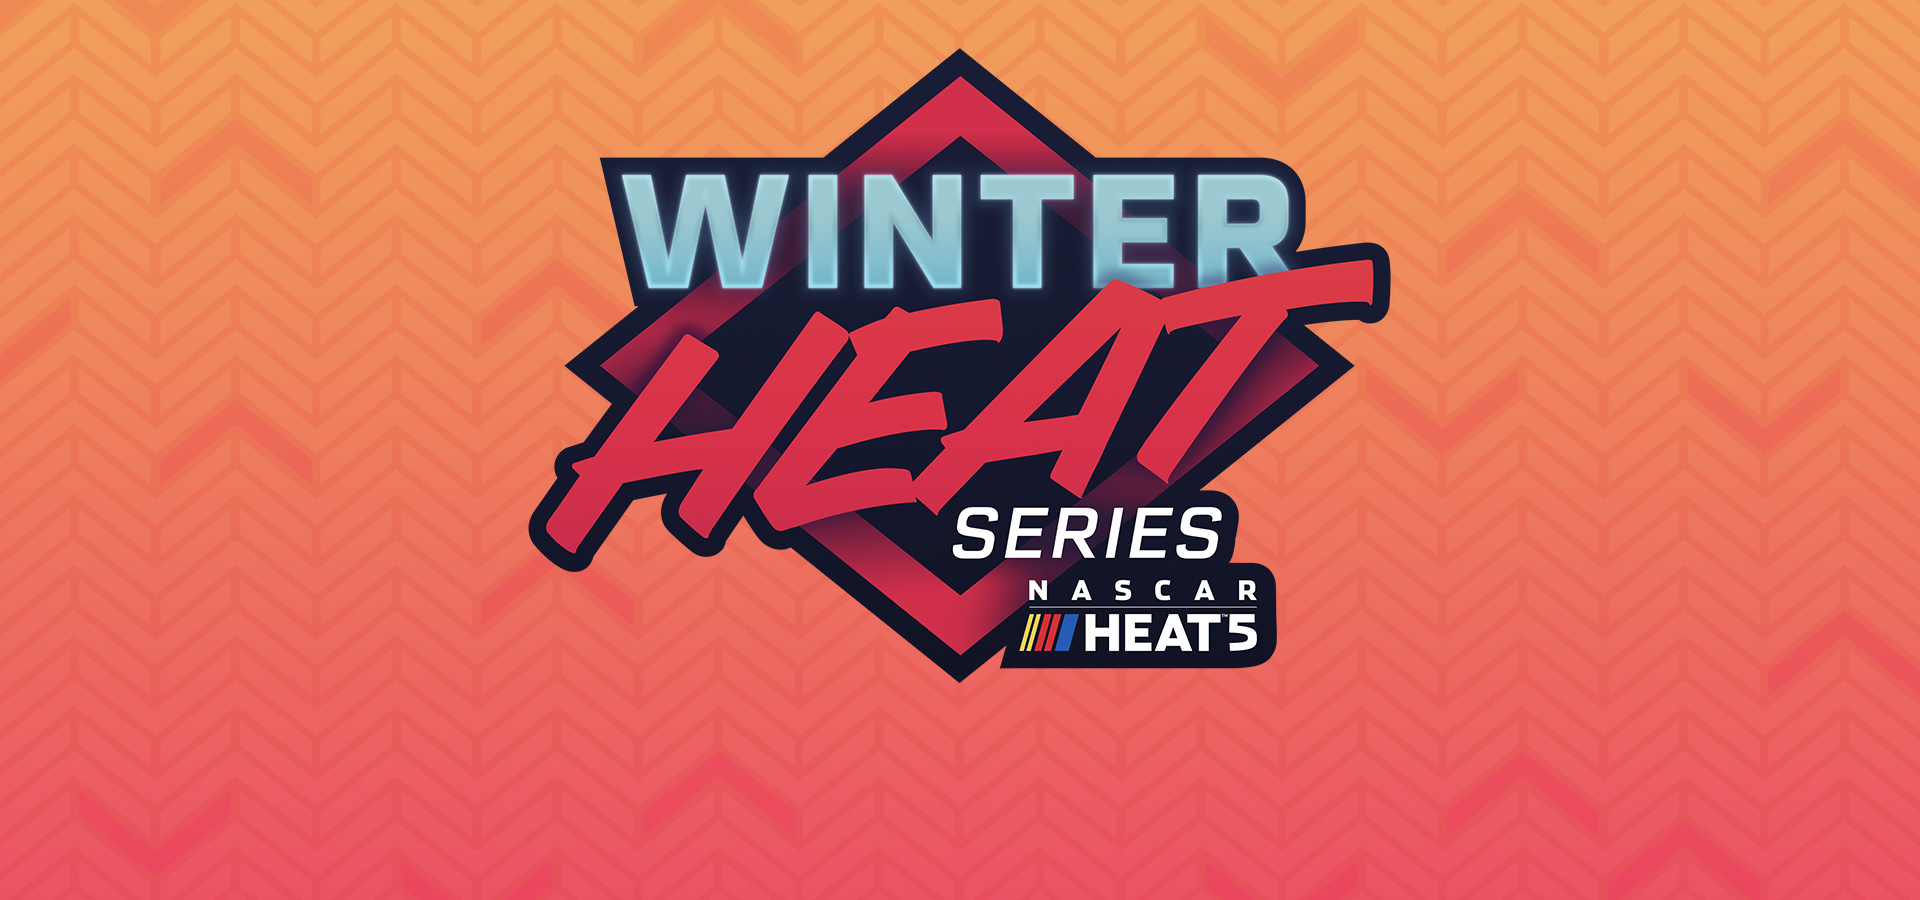 NASCAR Winter Heat Series